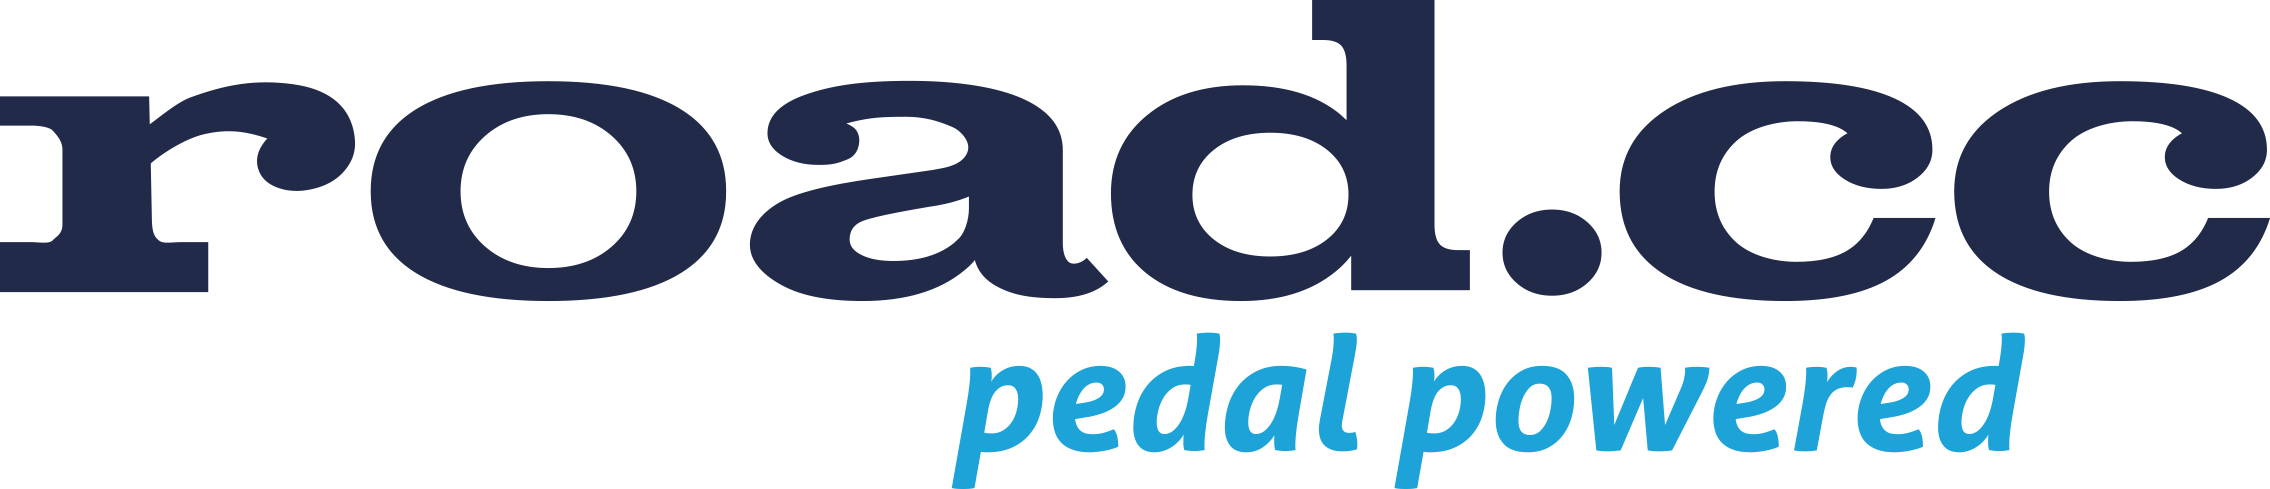 road.cc logo